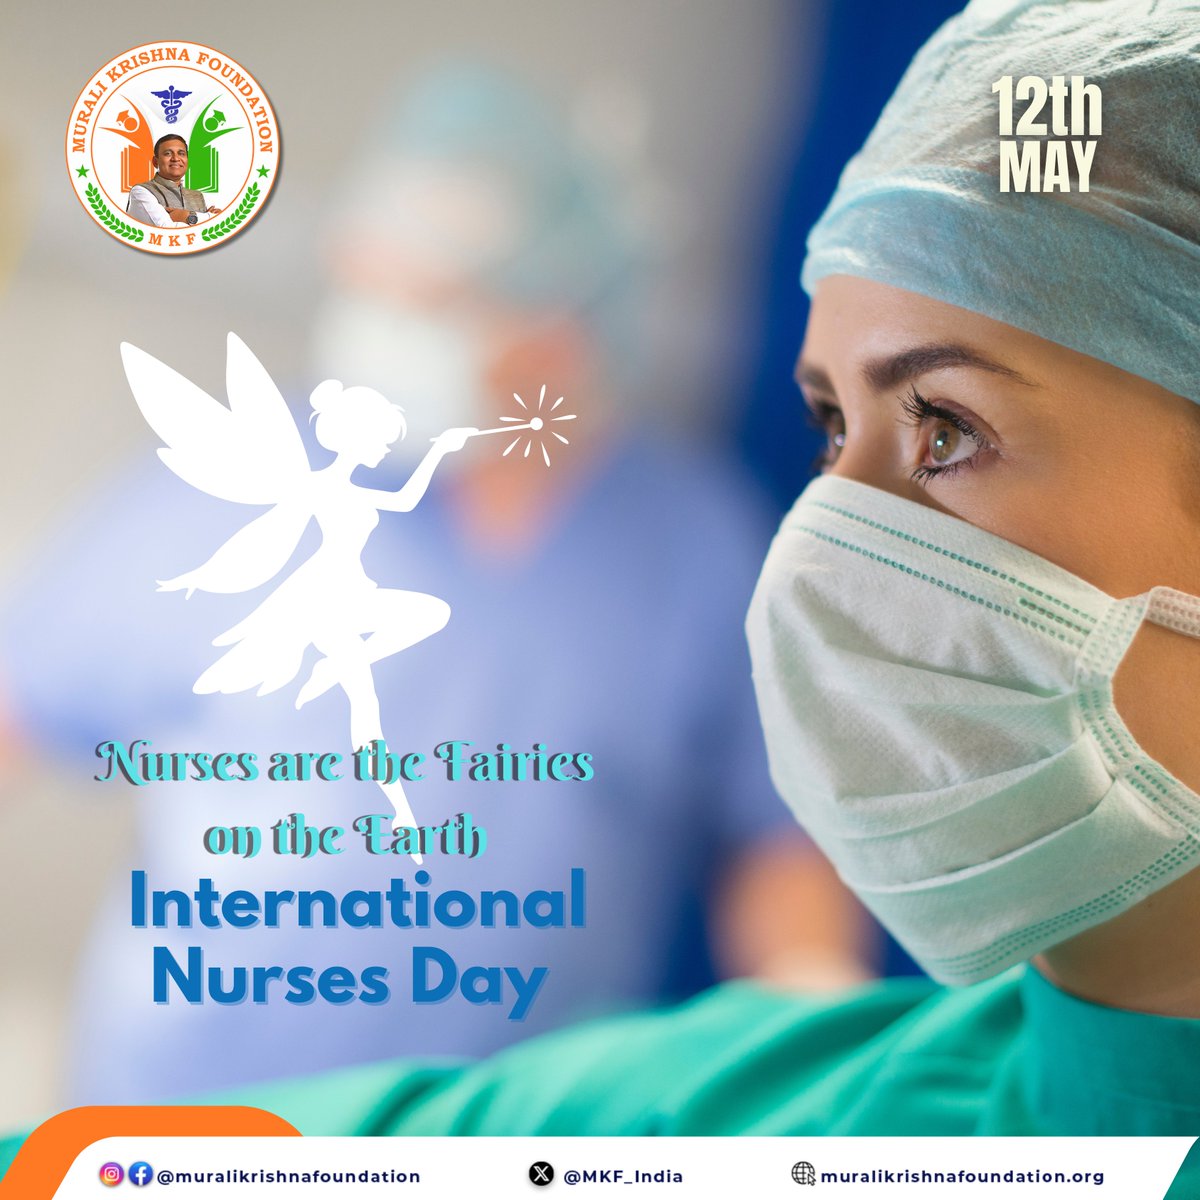 On International Nurses Day, we celebrate the heart and soul of healthcare. Thank you, nurses!

#muralikrishnafoundation #dmuralikrishna #mkf #MKFoundation #Bargarh #Odisha #InternationalNursesDay #nurses